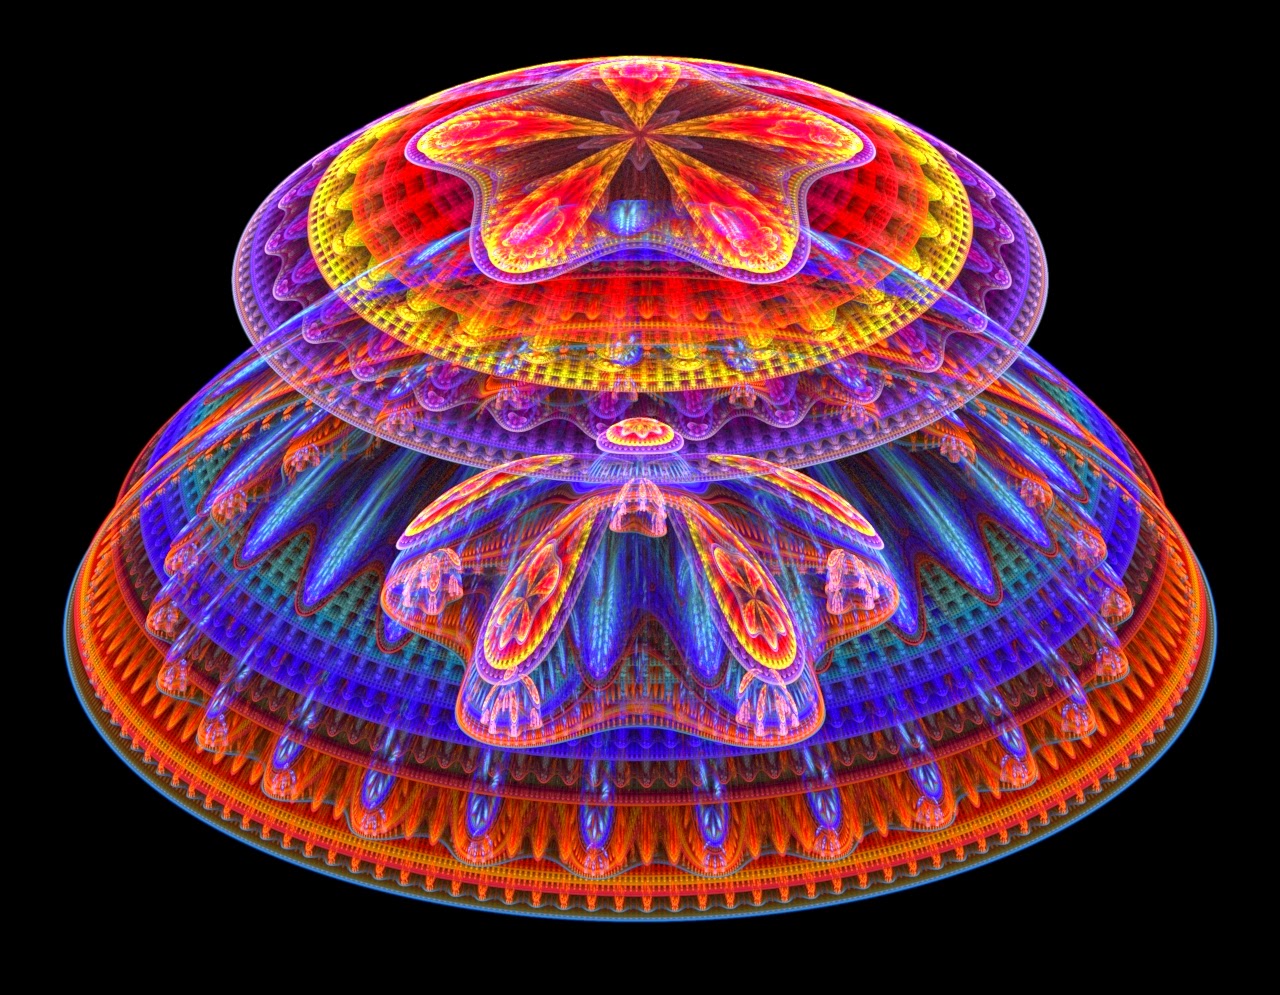 3D Abstract Trippy Mushroom Wallpaper | HD Wallpapers - www ...